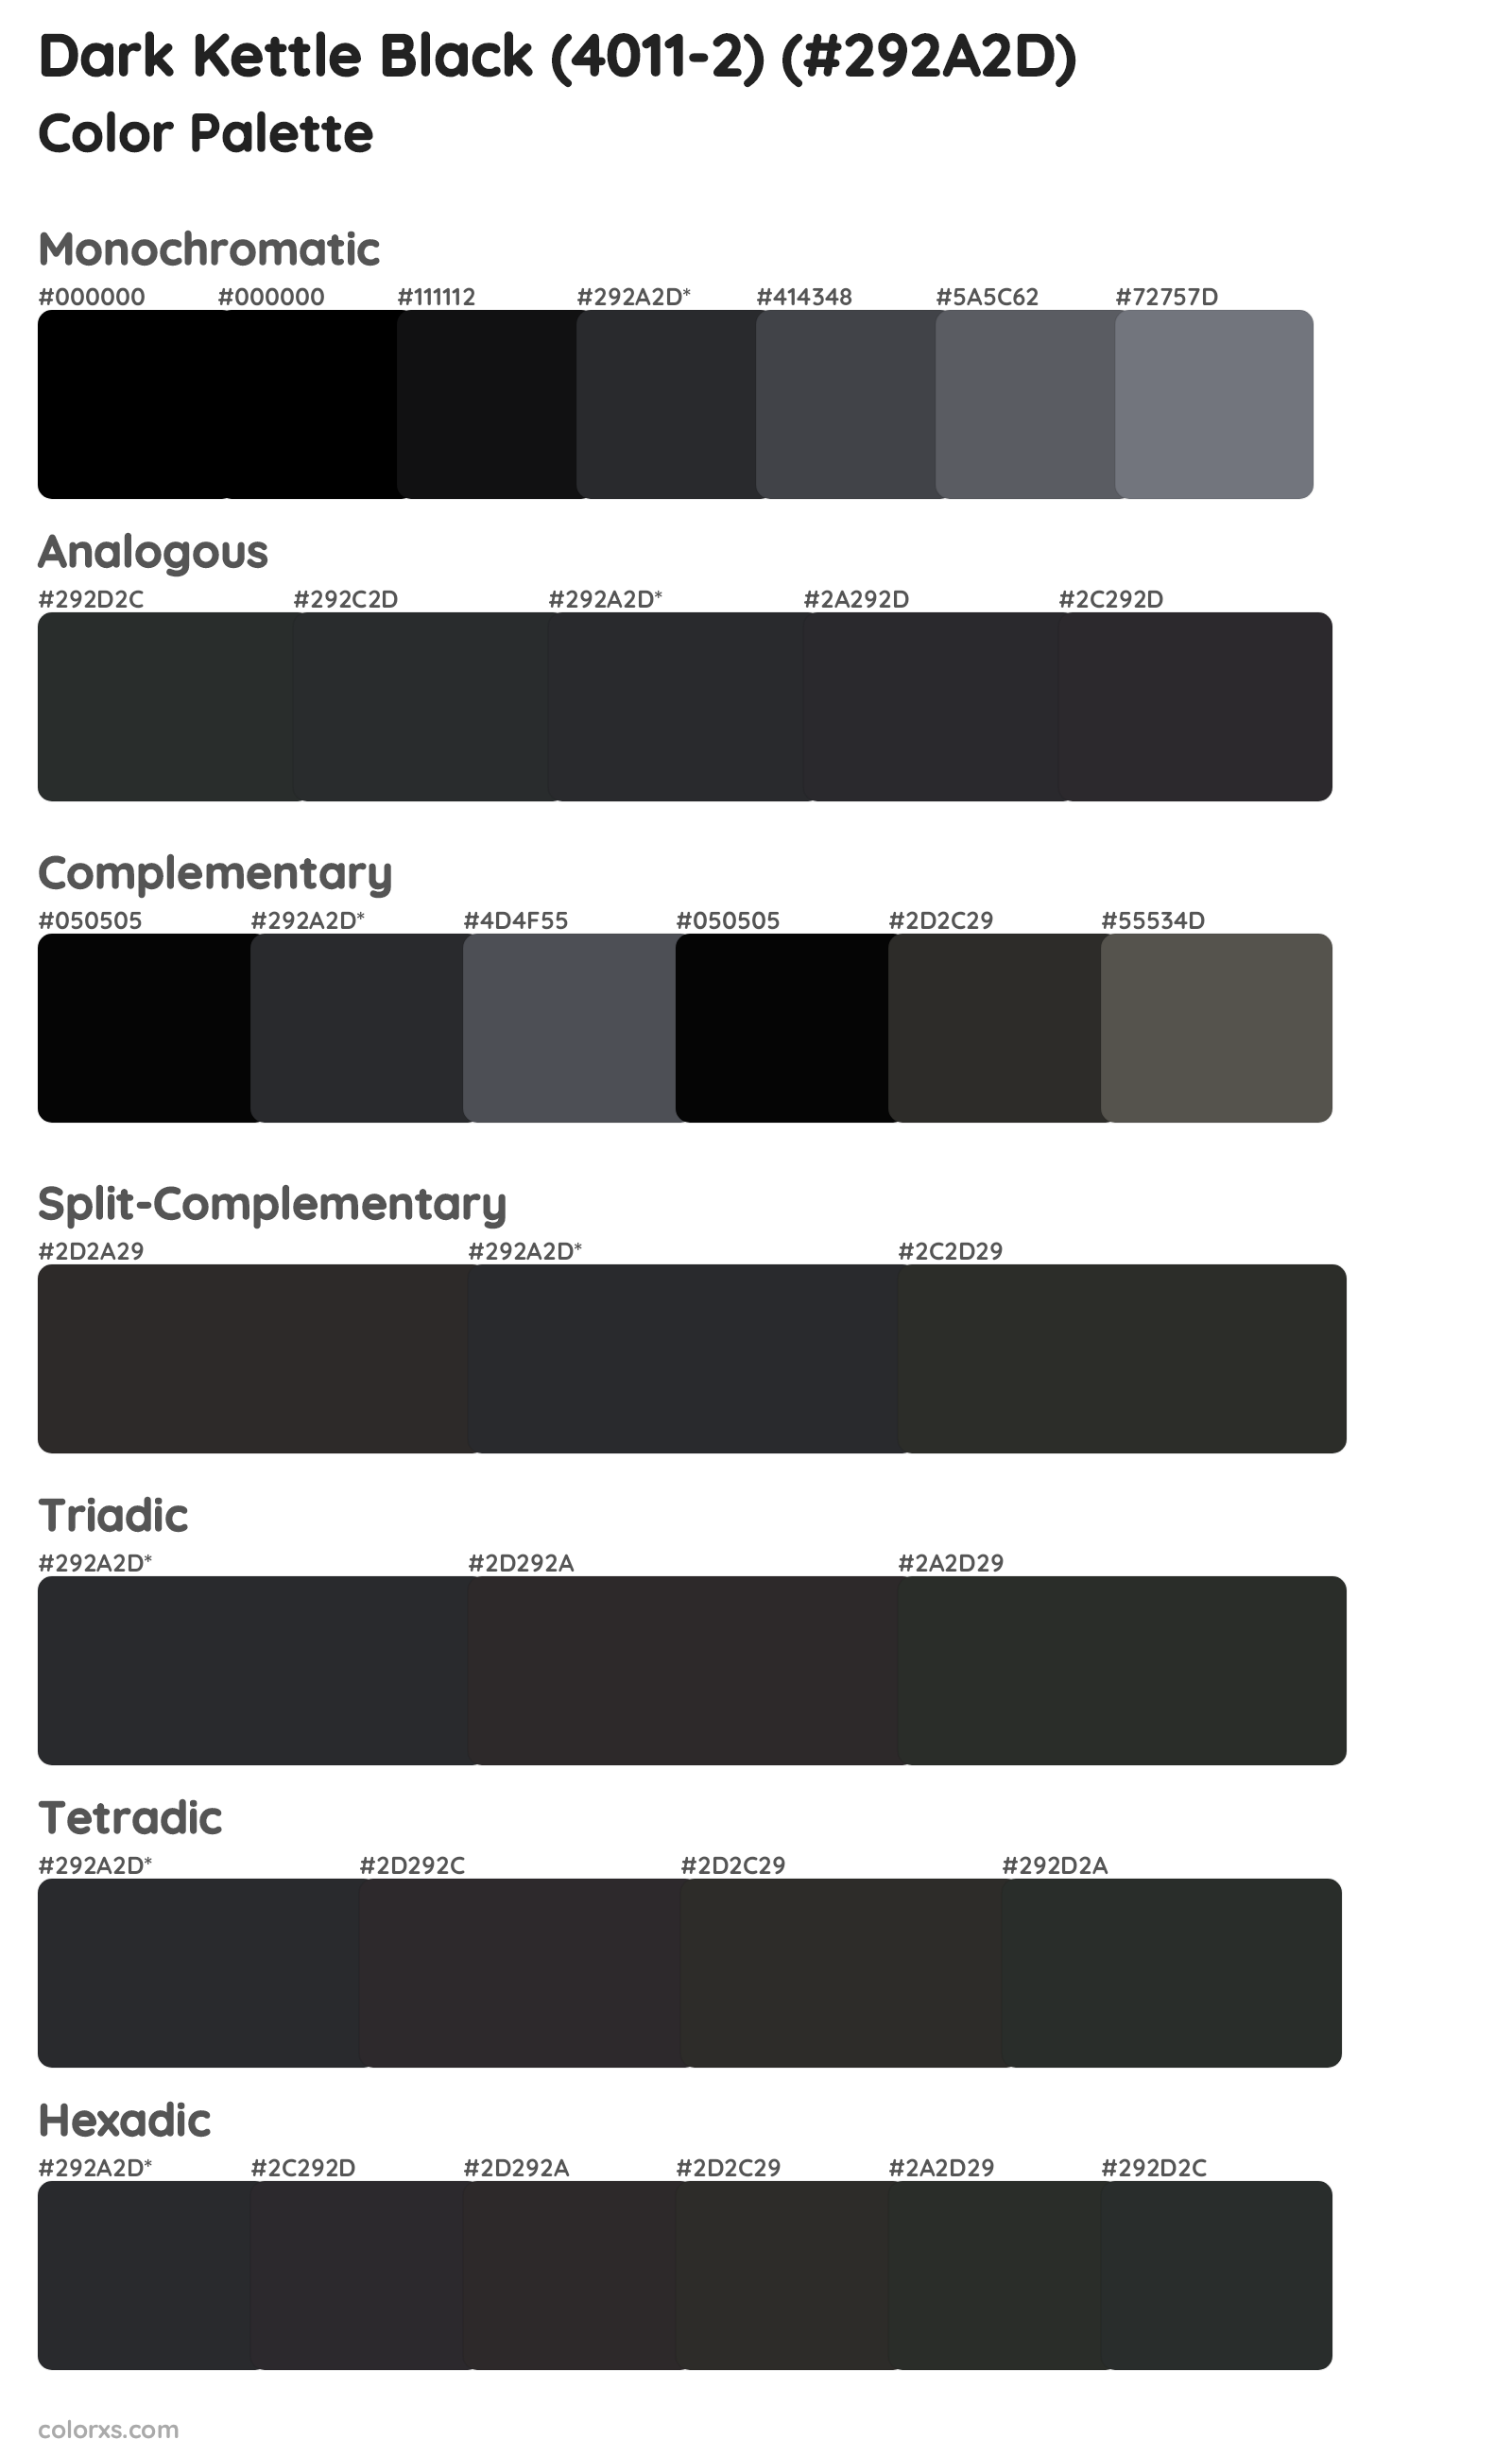 Dark Kettle Black (4011-2) Color Scheme Palettes